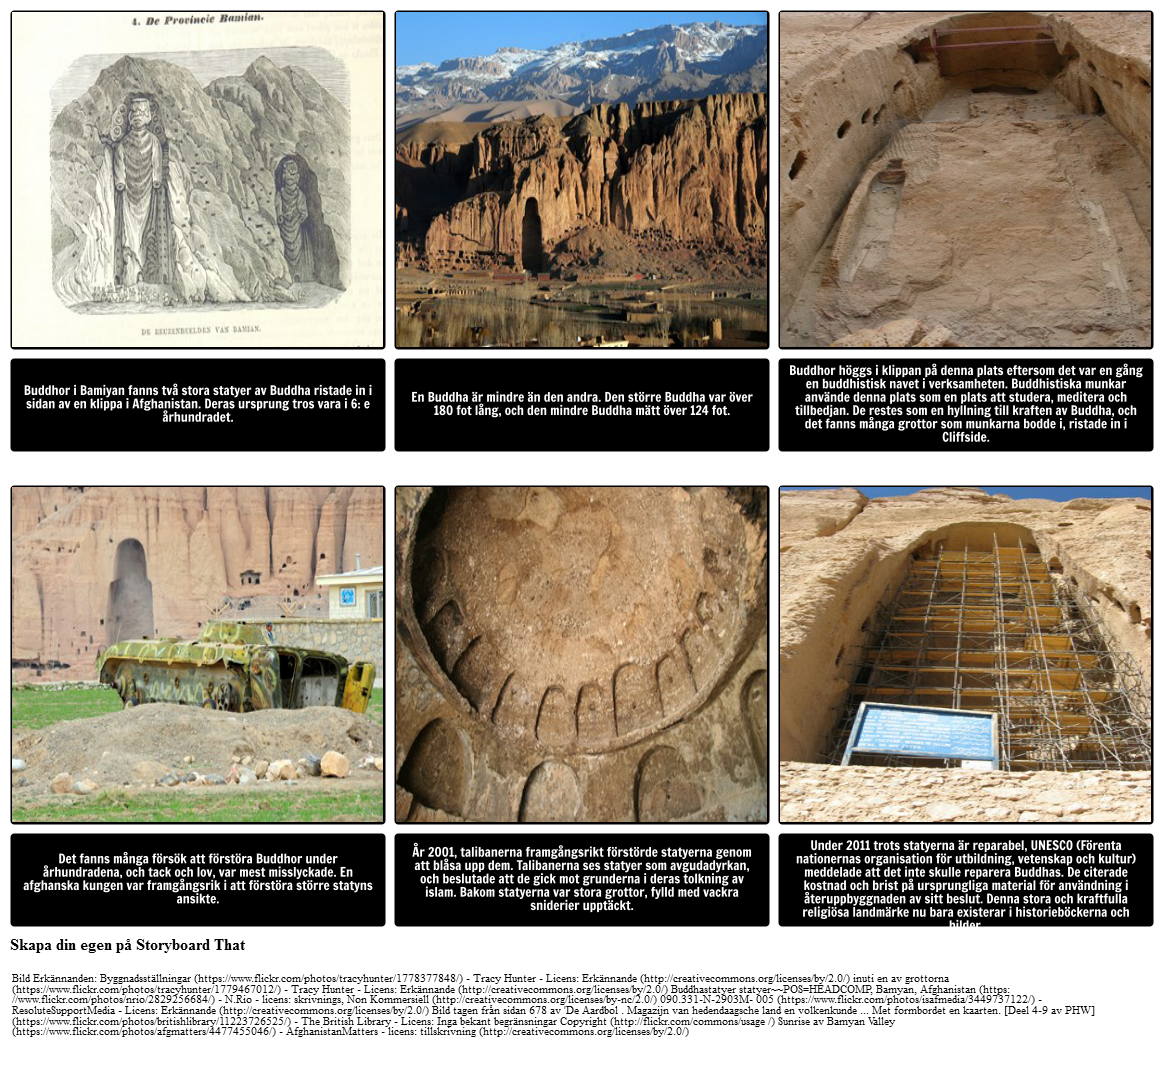 Anslutning med temat "Ozymandias": The Bamiyan Buddhas